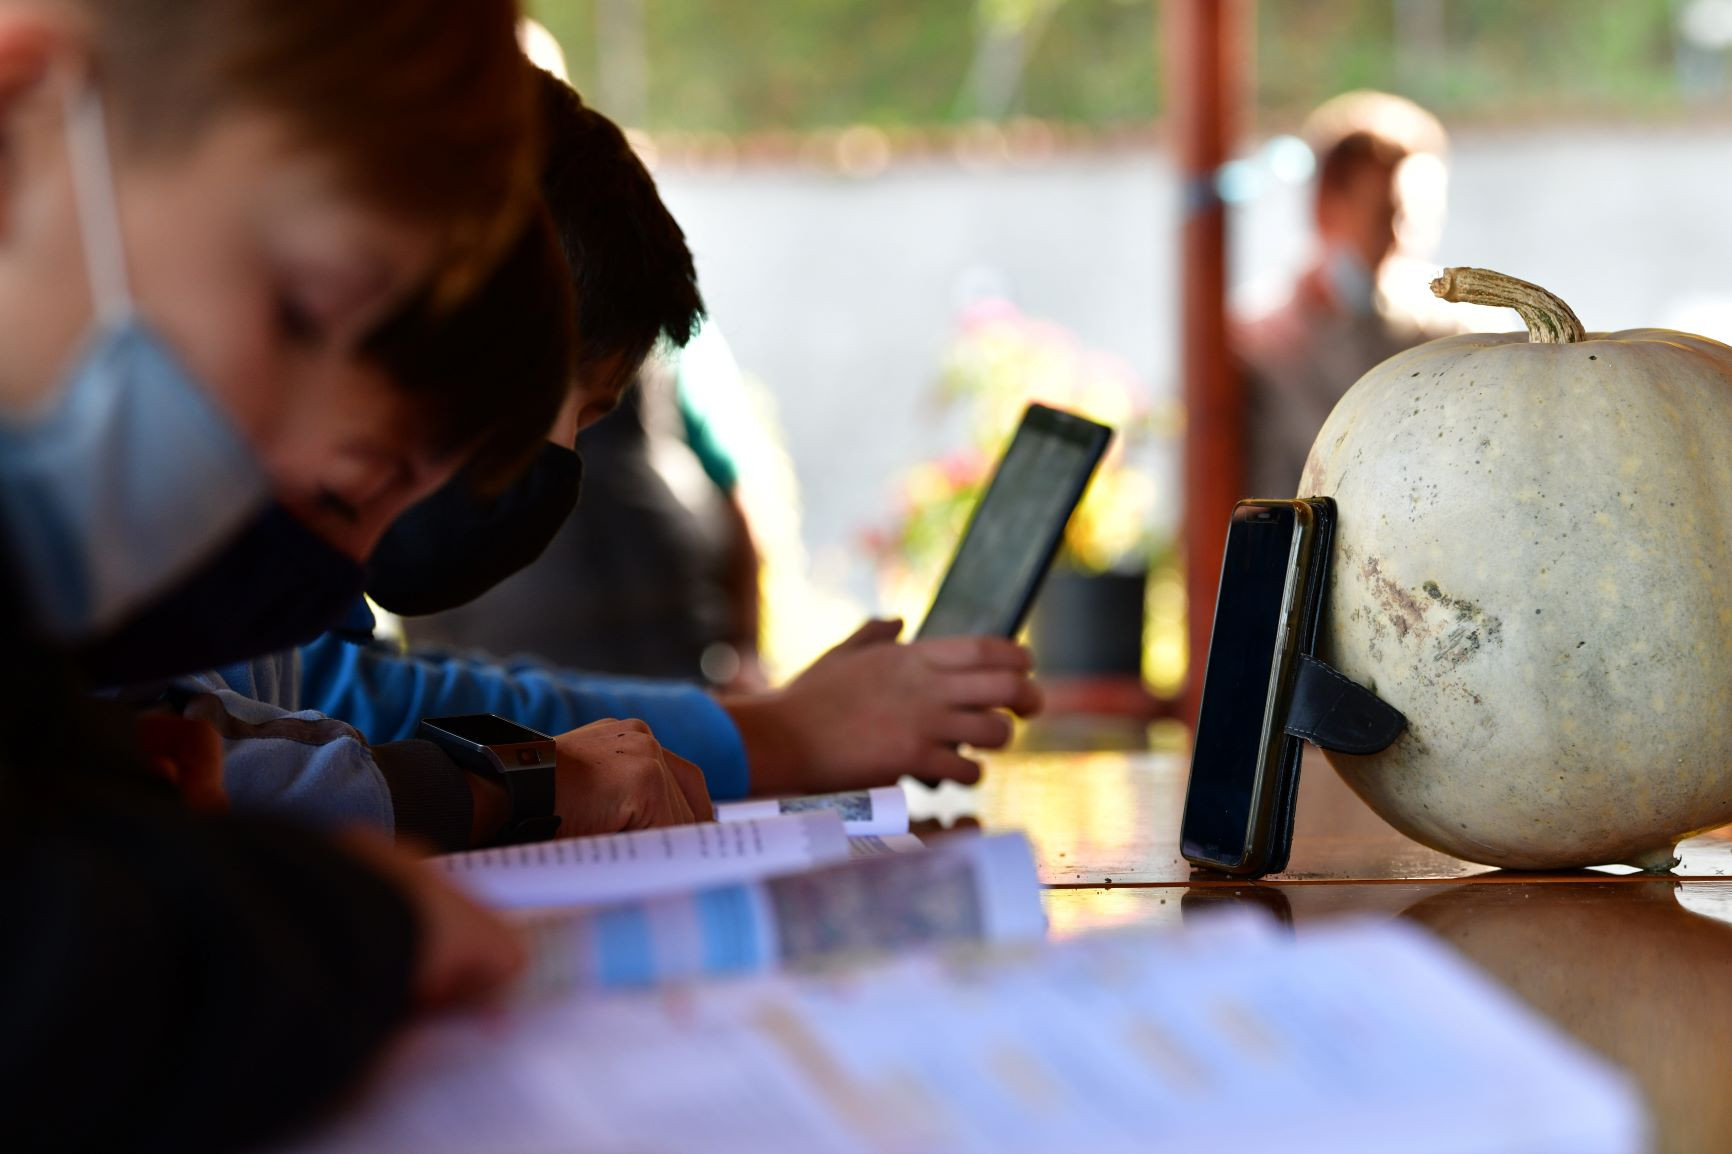 Tα παιδιά της καραντίνας στο tvxs.gr: Η τηλε-εκπαίδευση είναι σαν φαγητό σε κονσέρβα